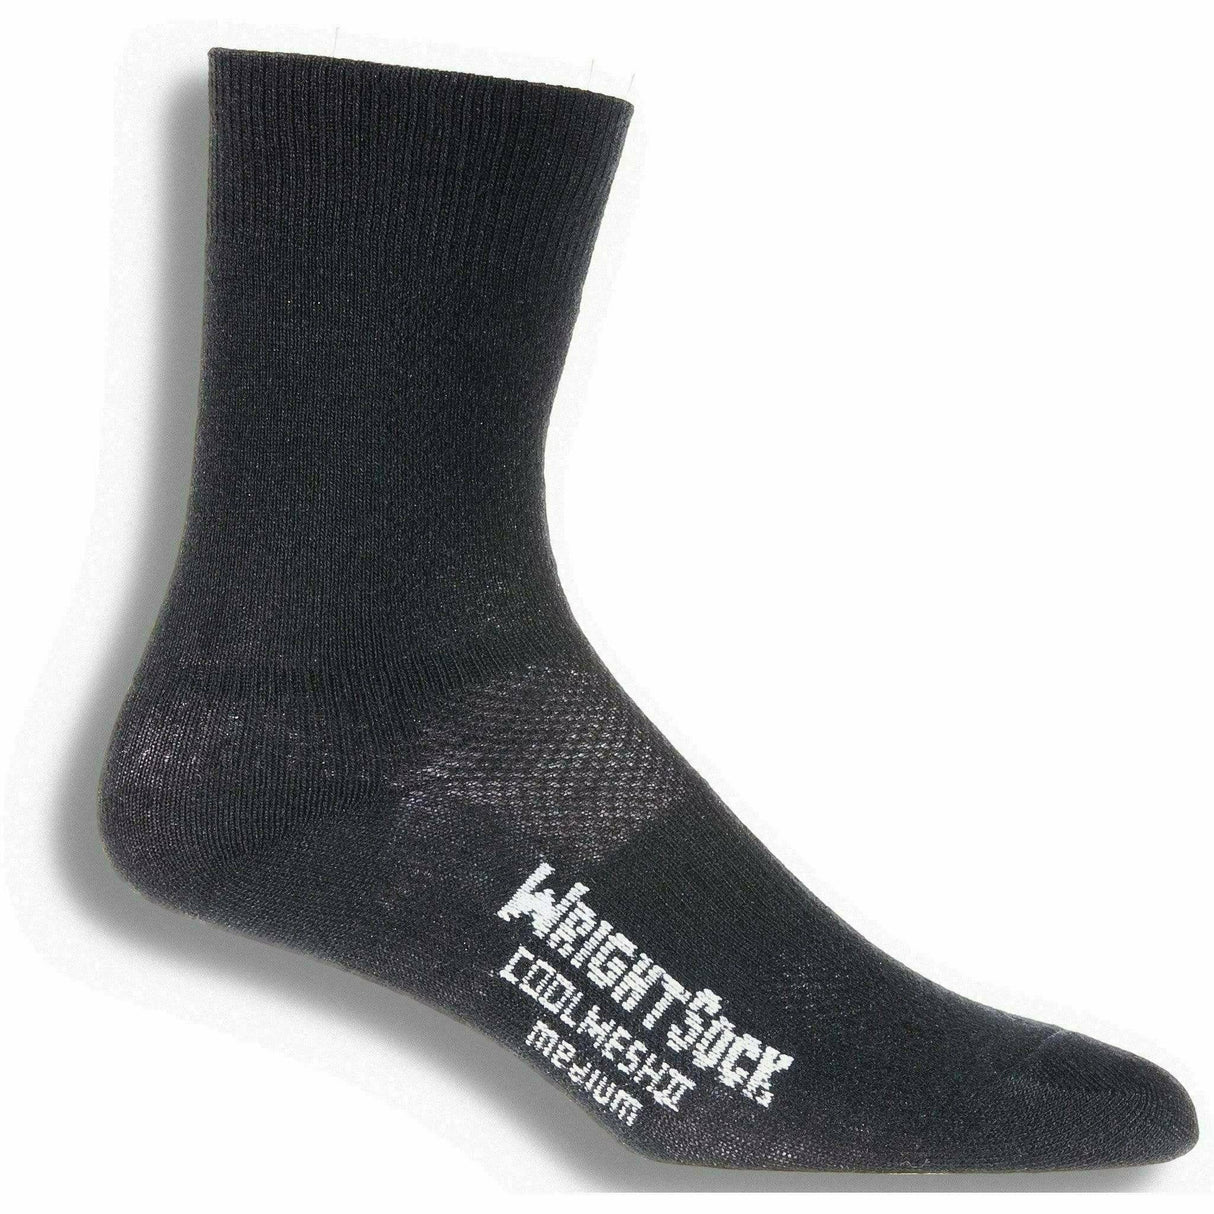 Wrightsock Coolmesh II Crew Socks - Clearance  -  Small / Black / 2-Pair Pack